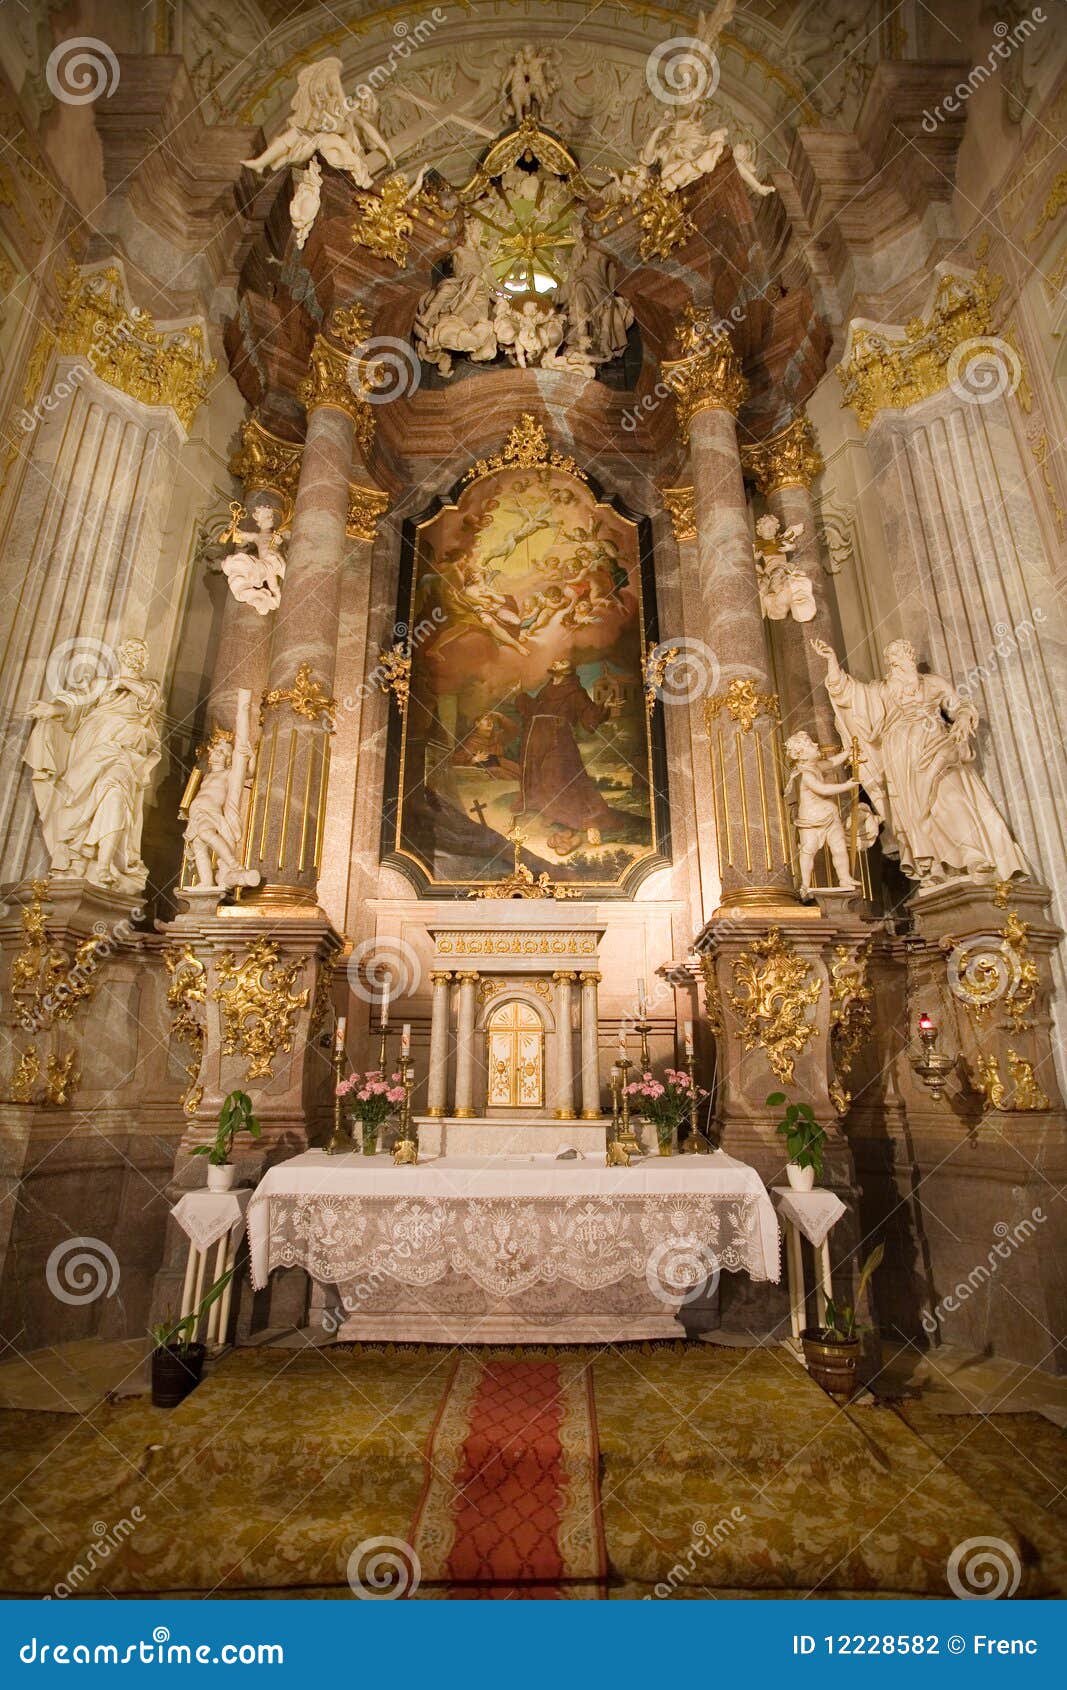 interior of a catholic church